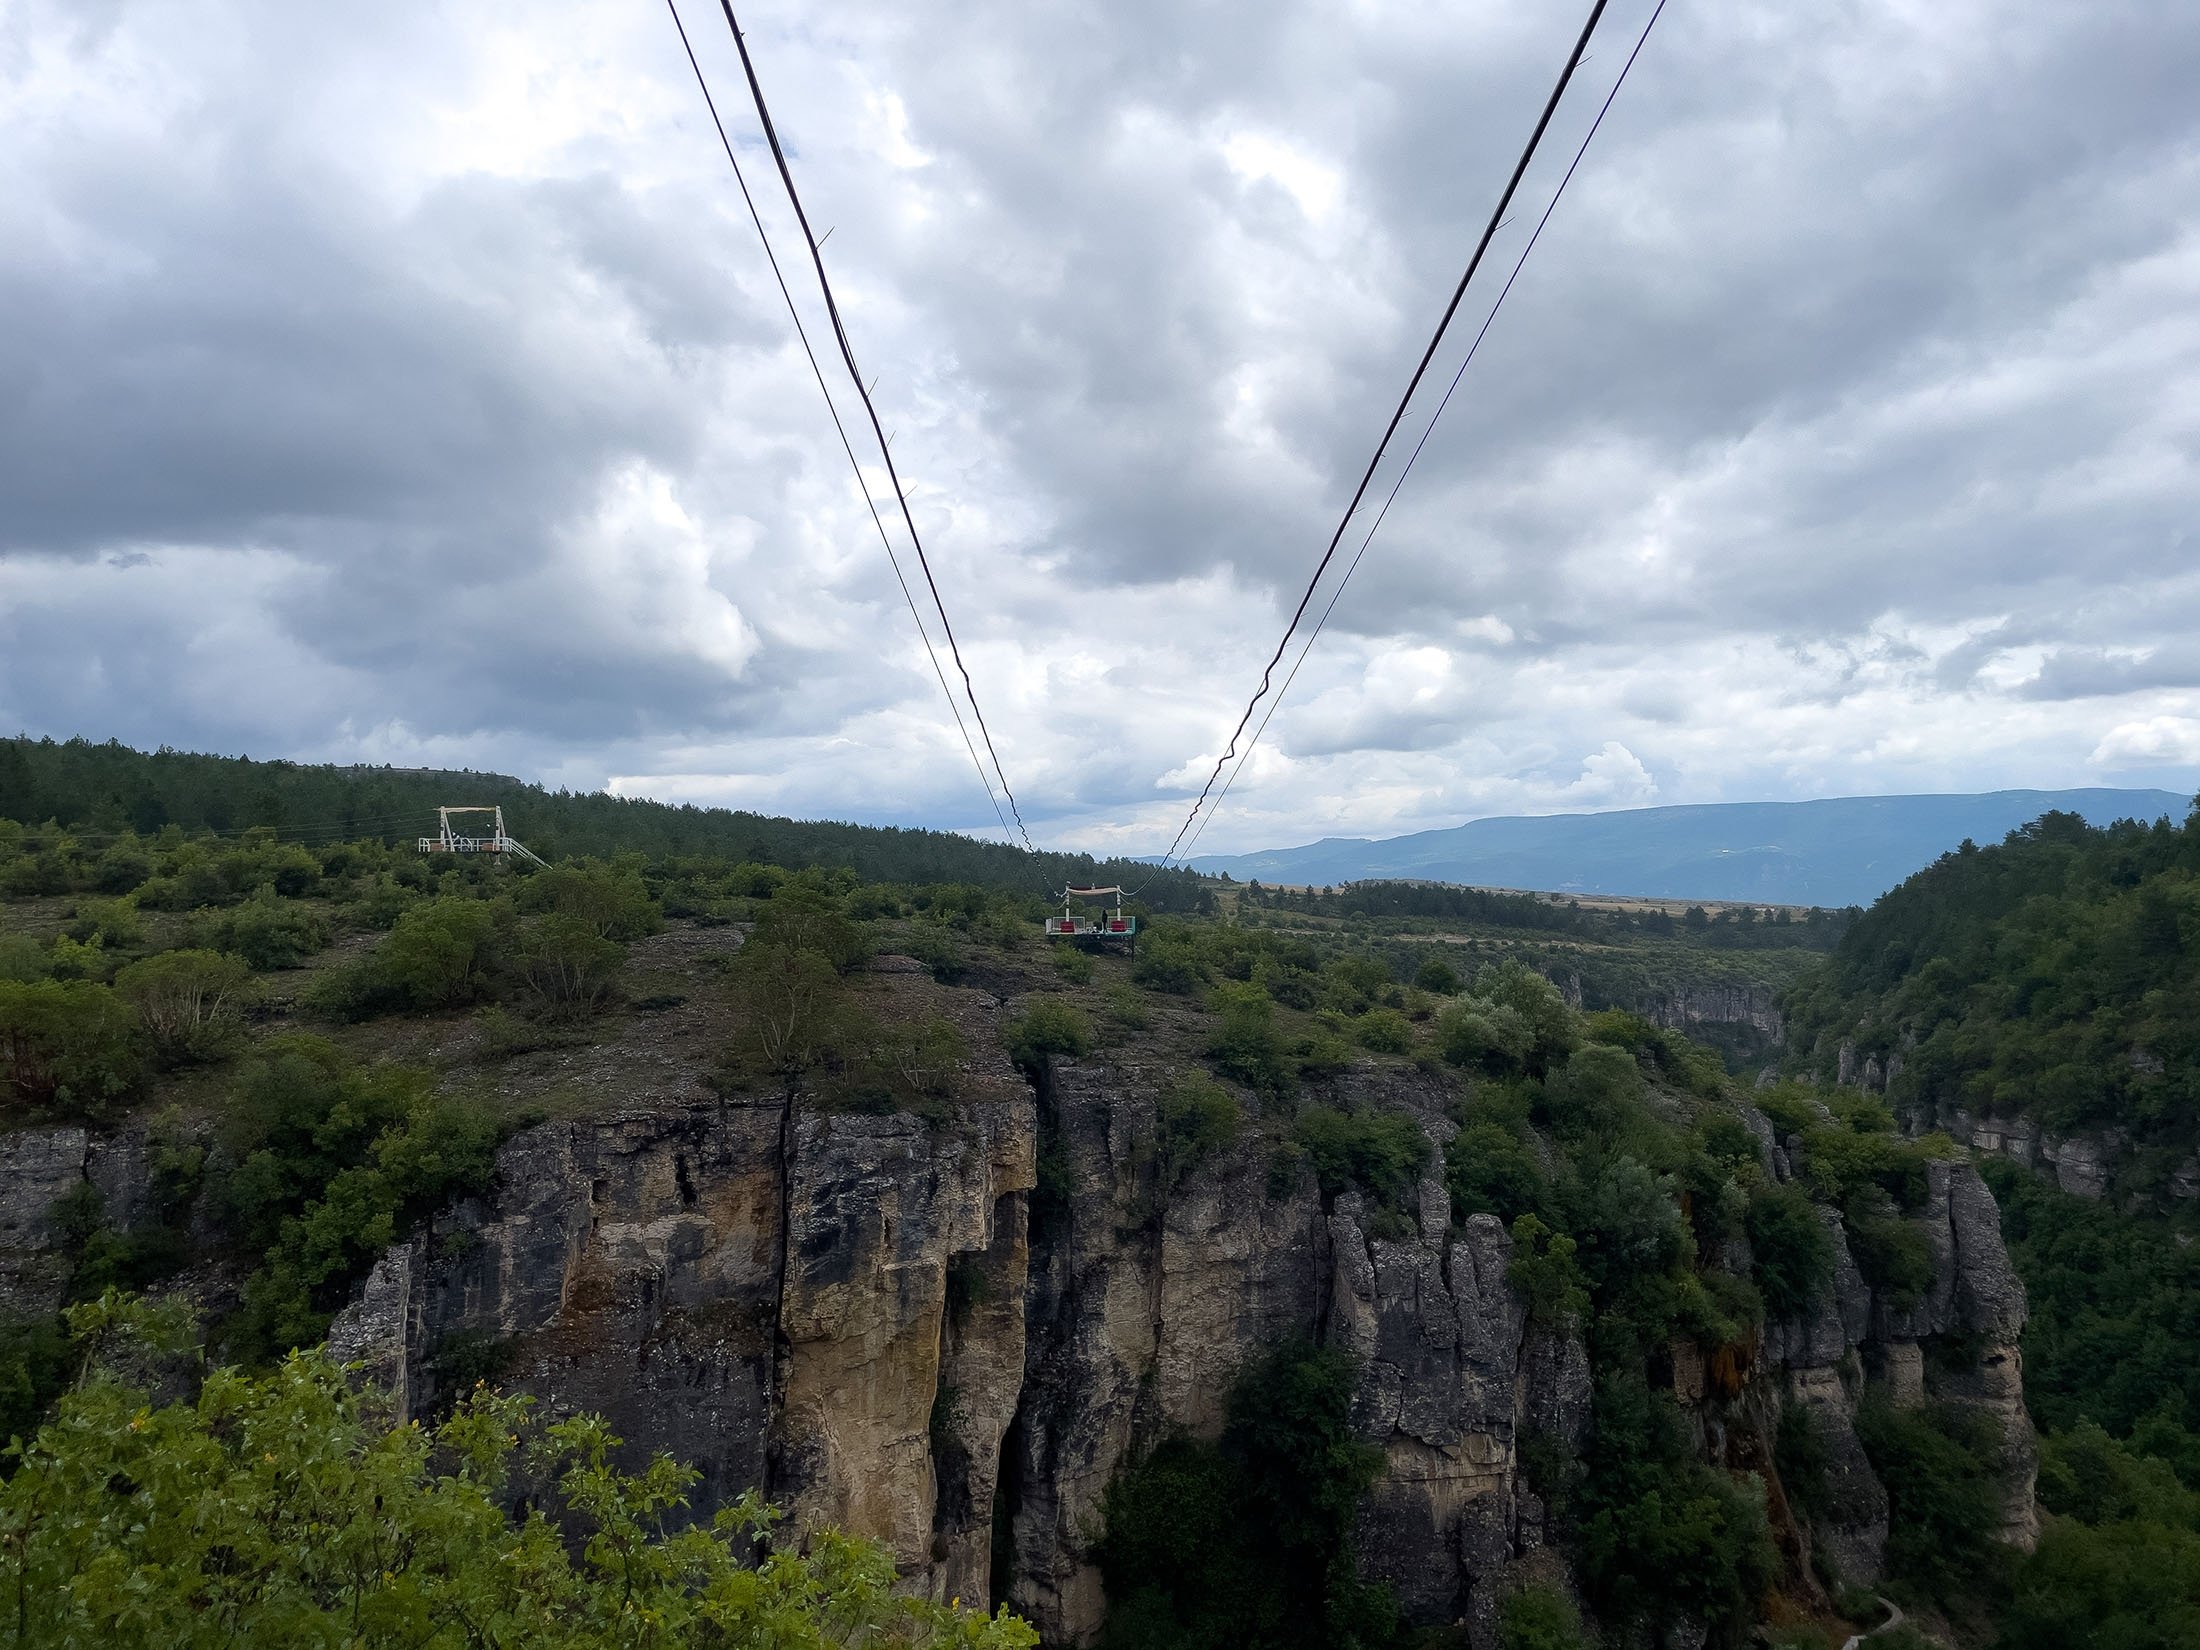 A zipline goes across a canyon in Safranbolu, Karabük, northern Turkey, July 10, 2022. (Photo by Ahmet Koçak)